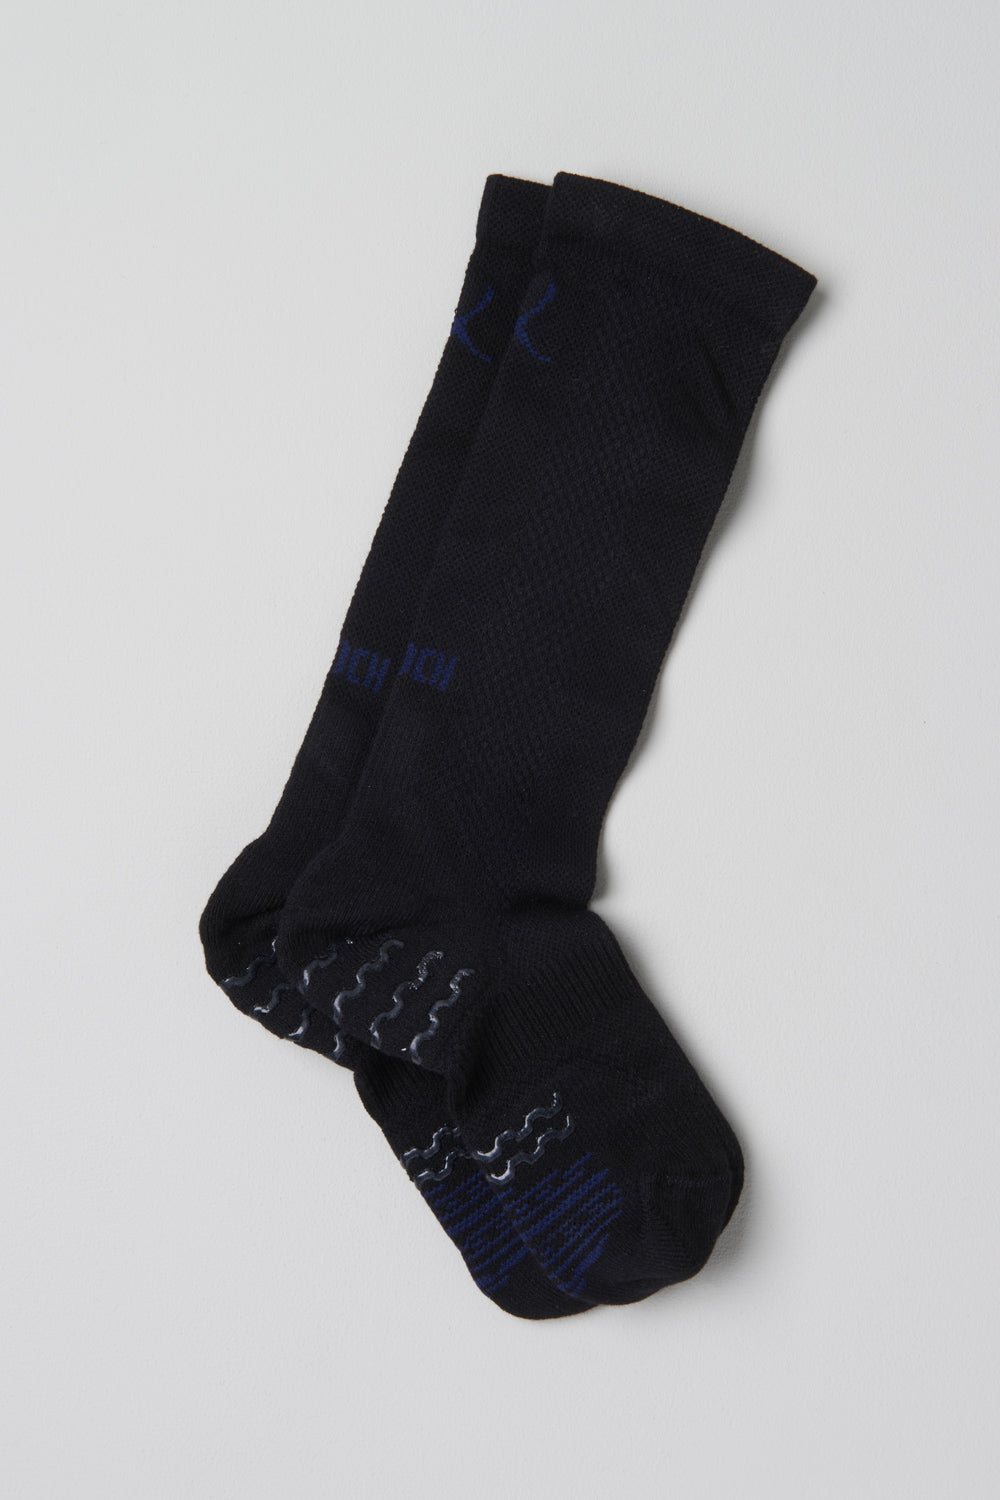 Black Dance Socks  Dancewear Solutions®